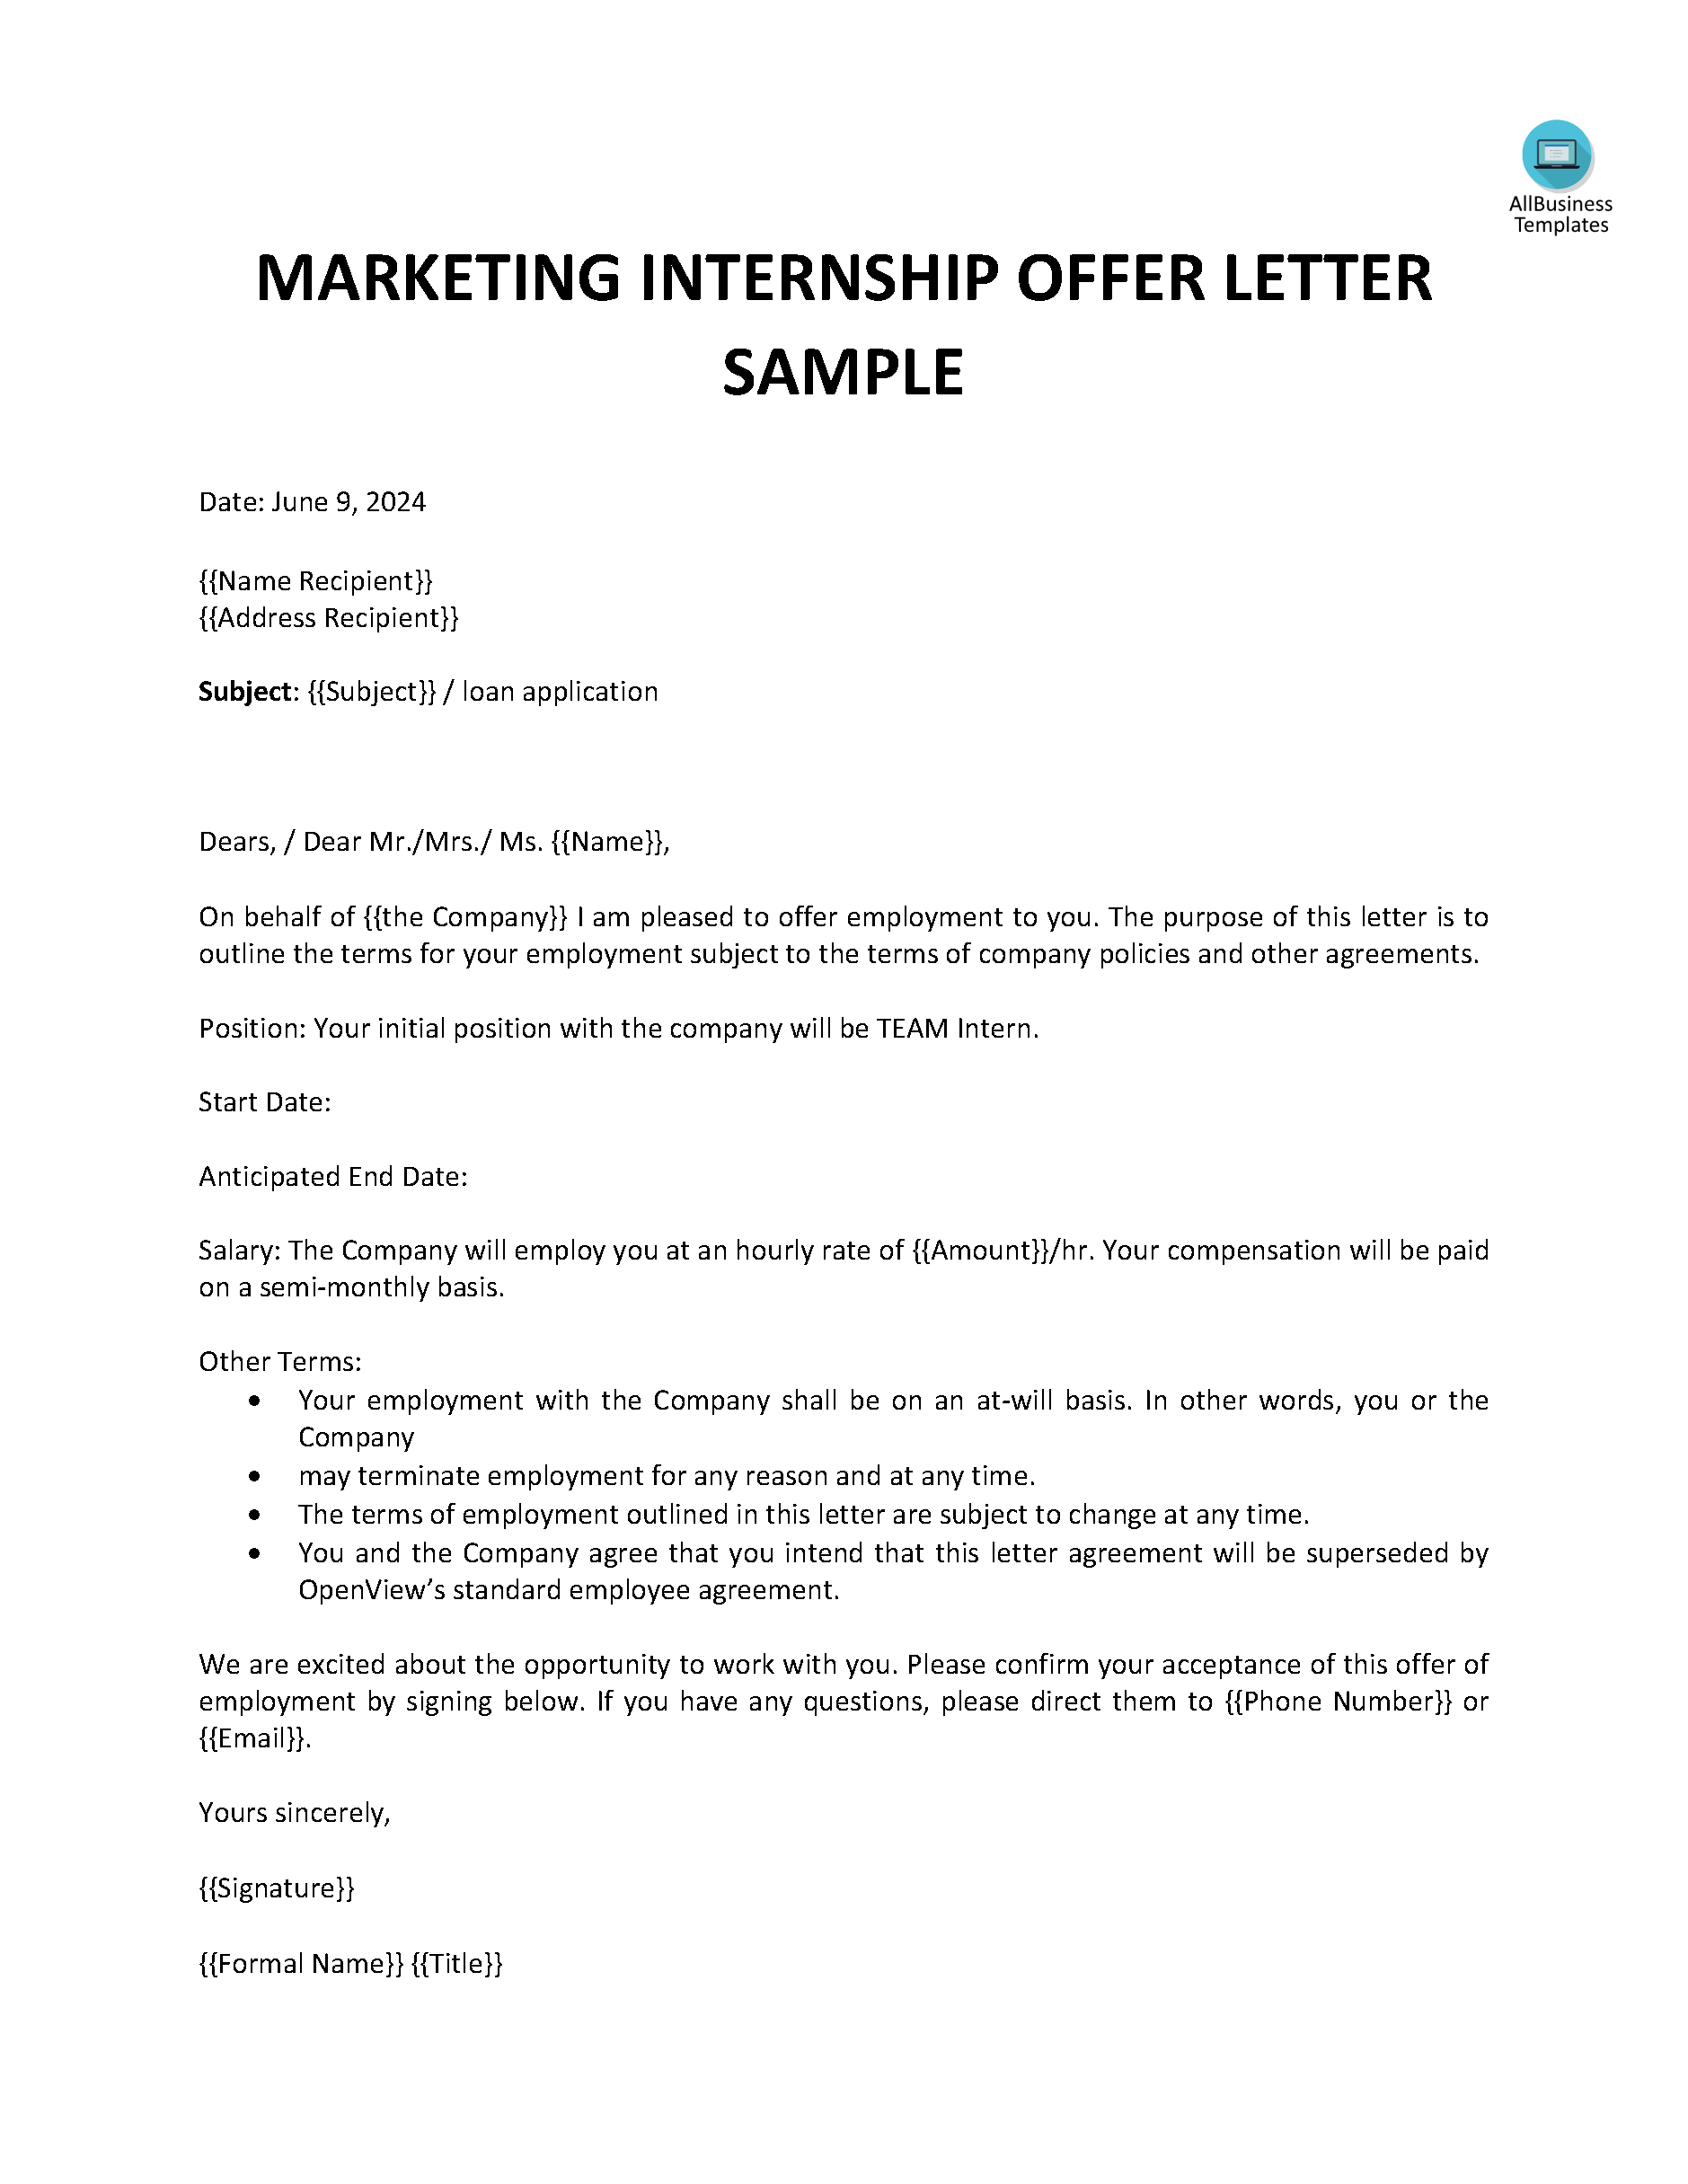 Sample Marketing Internship Offer Letter Templates at